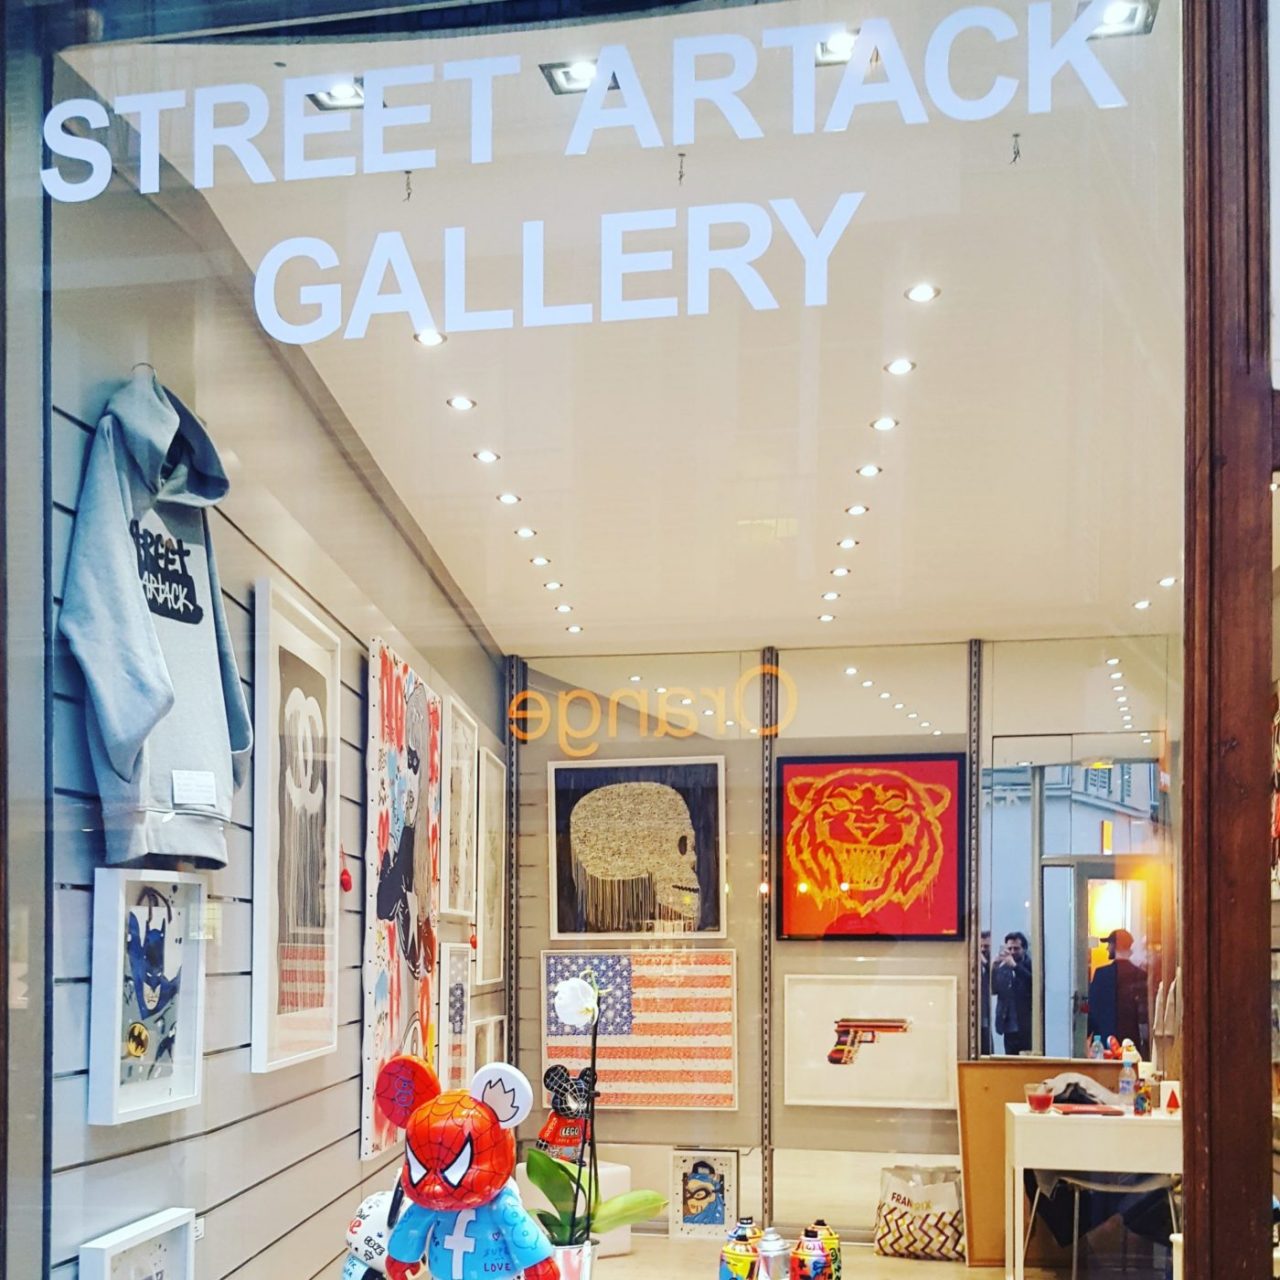 Street Artack Gallery